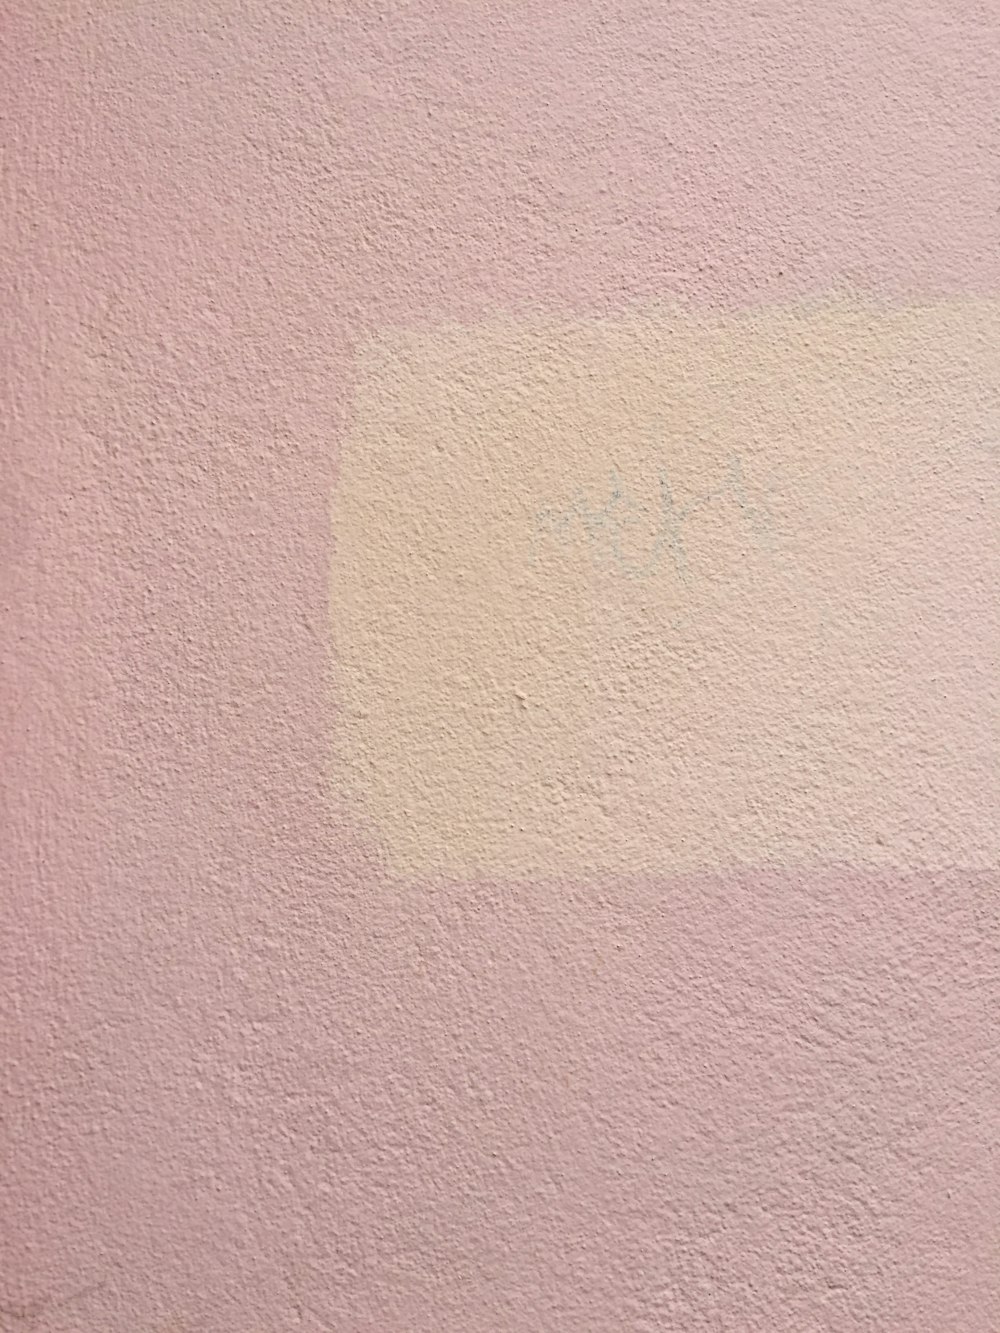 pink concrete surface